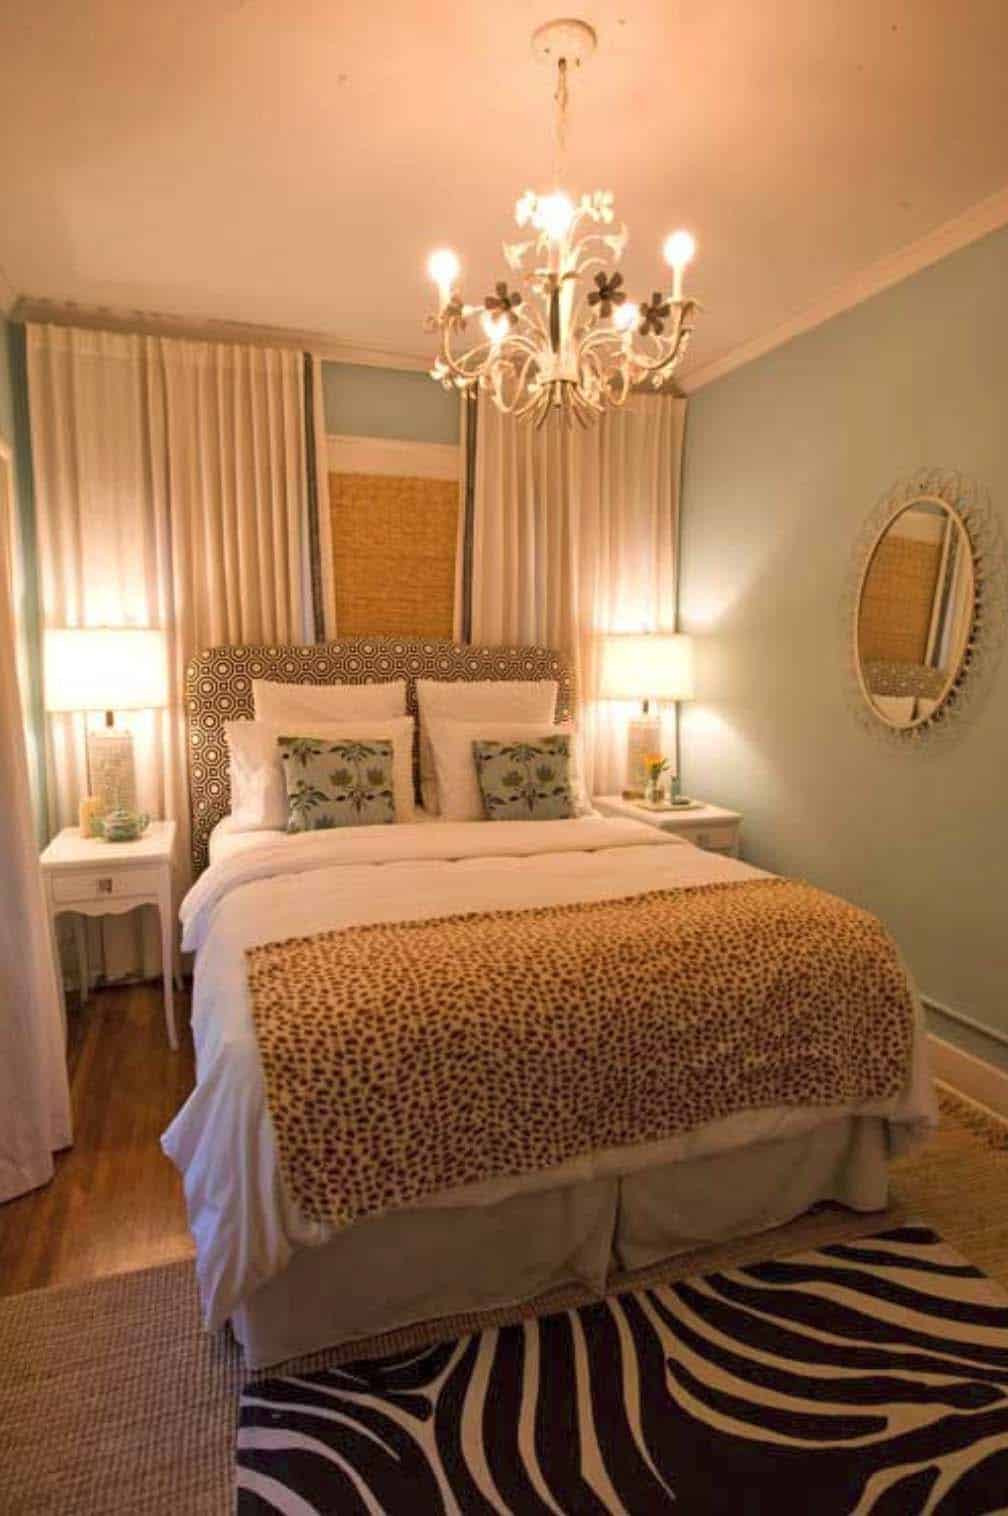 Master Bedroom Pics
 30 Small yet amazingly cozy master bedroom retreats